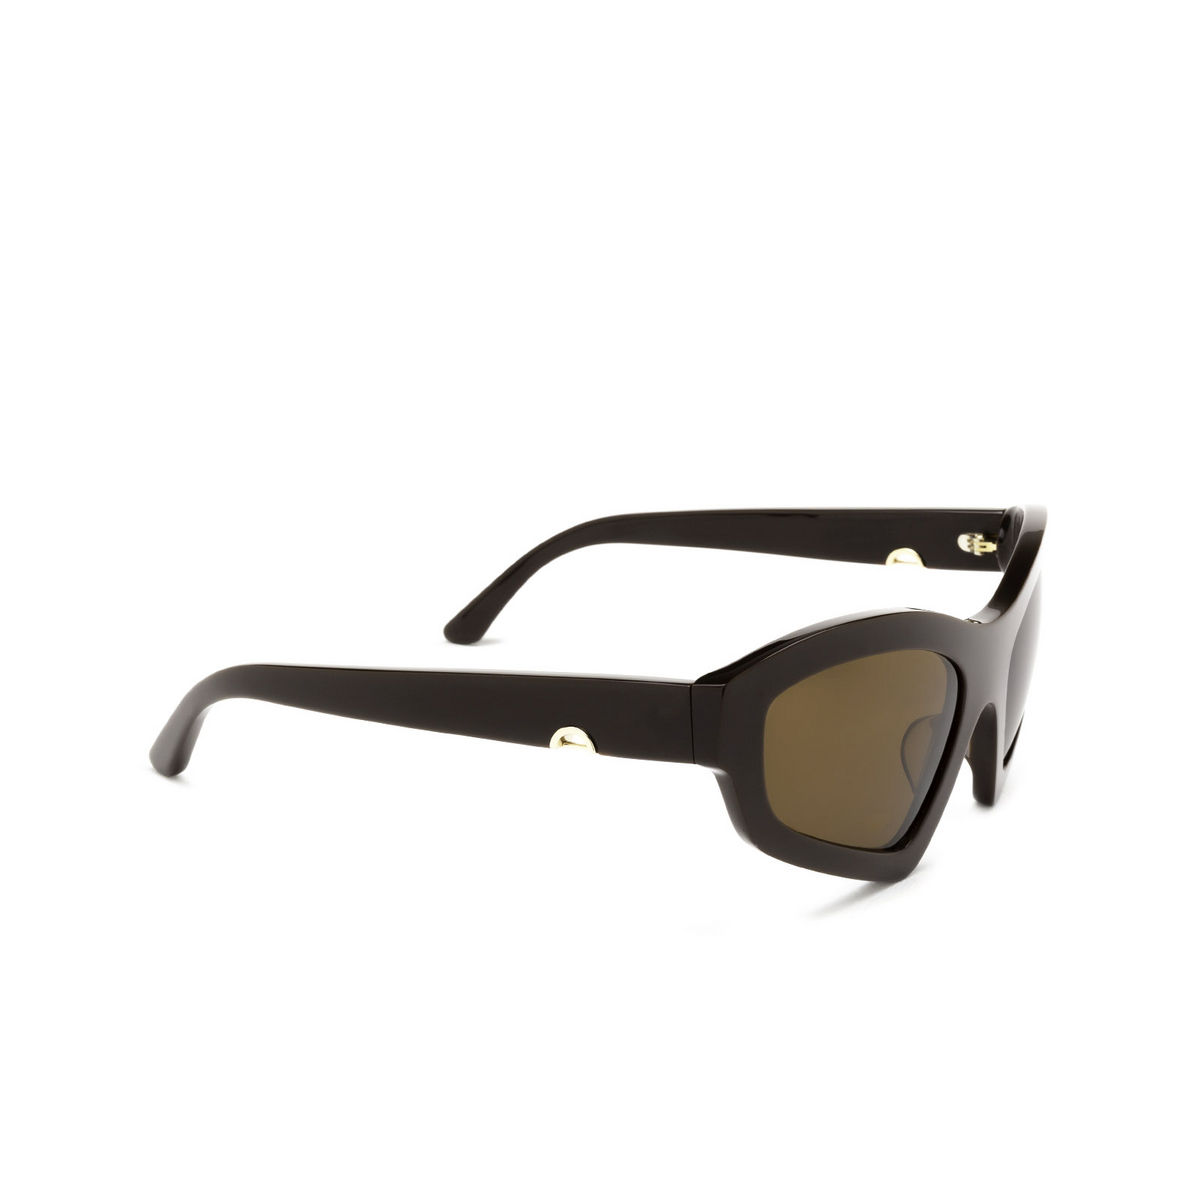 Huma® Cat-eye Sunglasses: Enne color Chocolate 22 - three-quarters view.